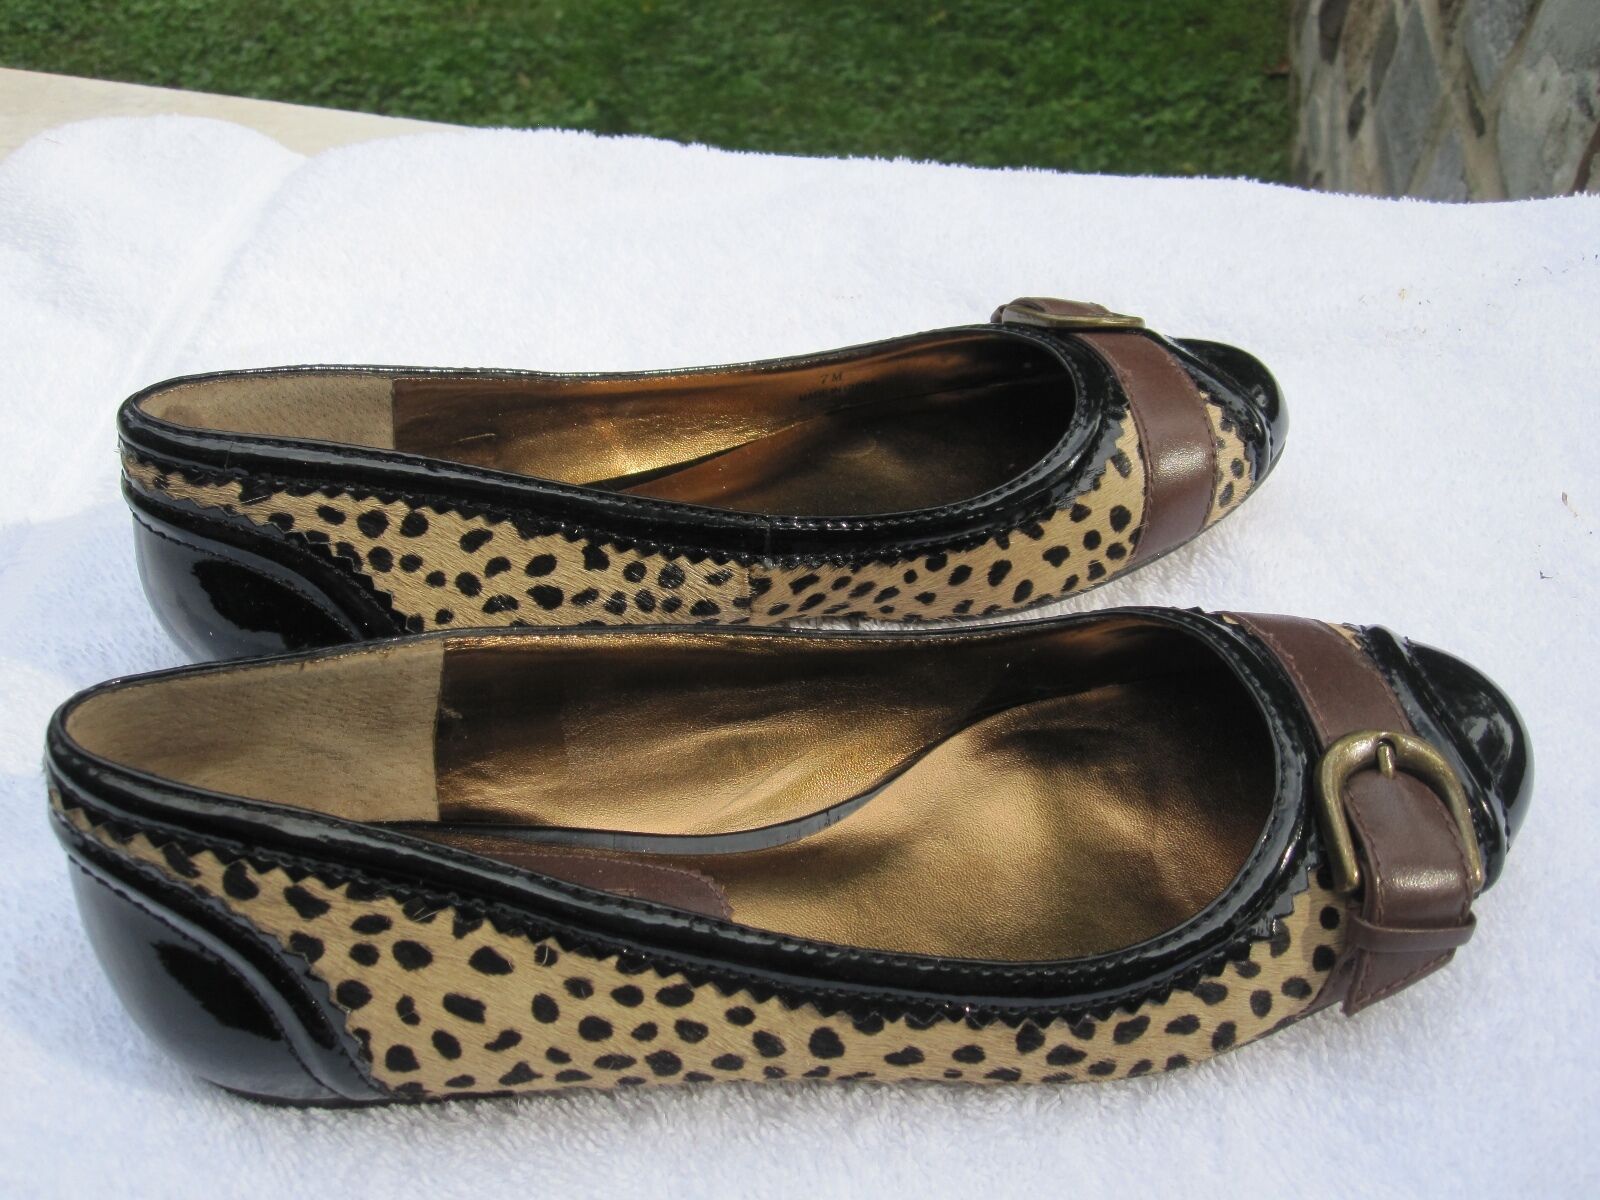   Charles David Ballet Flats-Black Patent, Cheetah Pony, Brown Leather-7M